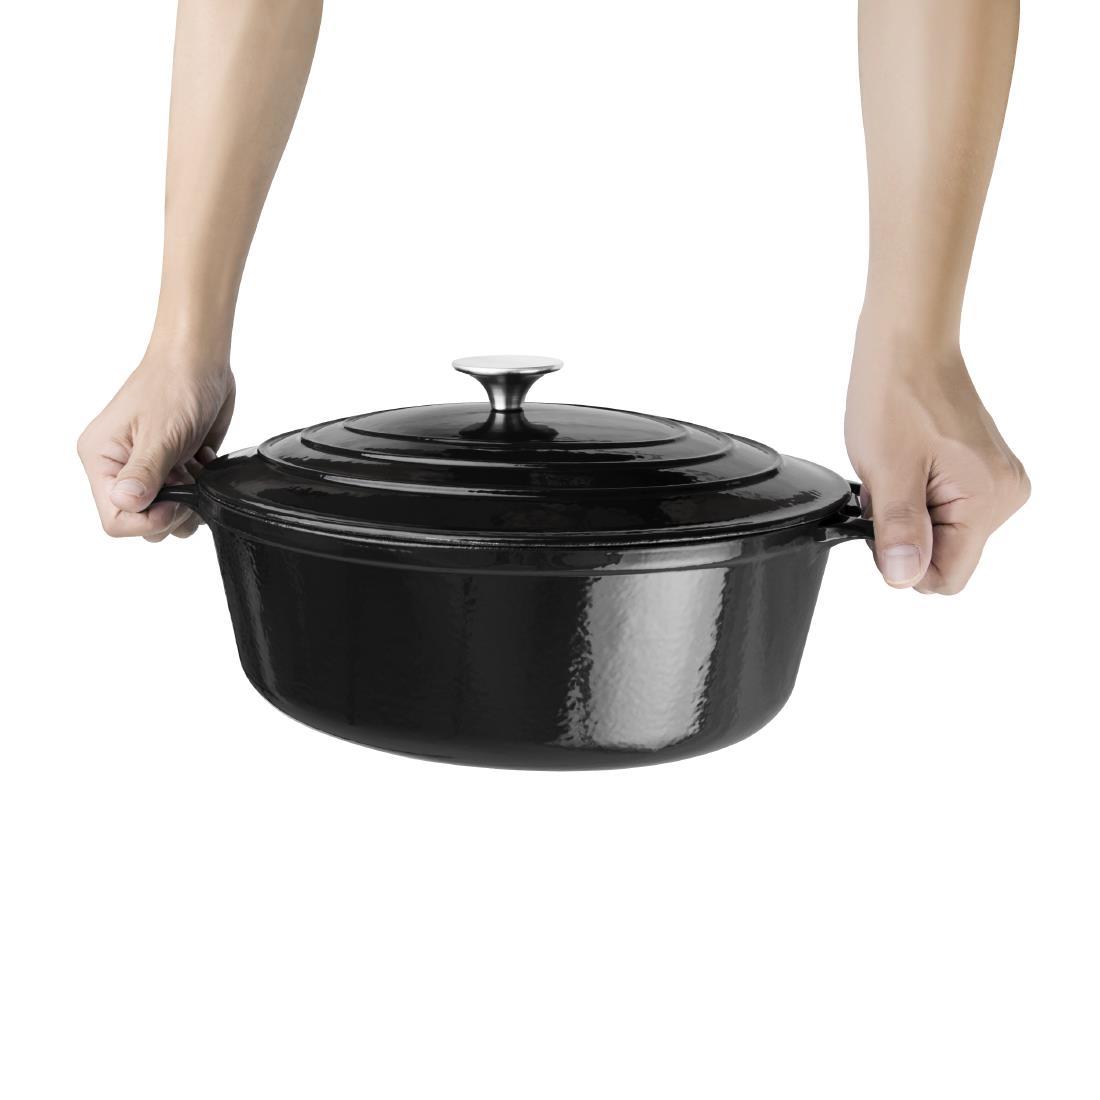 Vogue Black Oval Casserole Dish 5Ltr - GH306  - 4